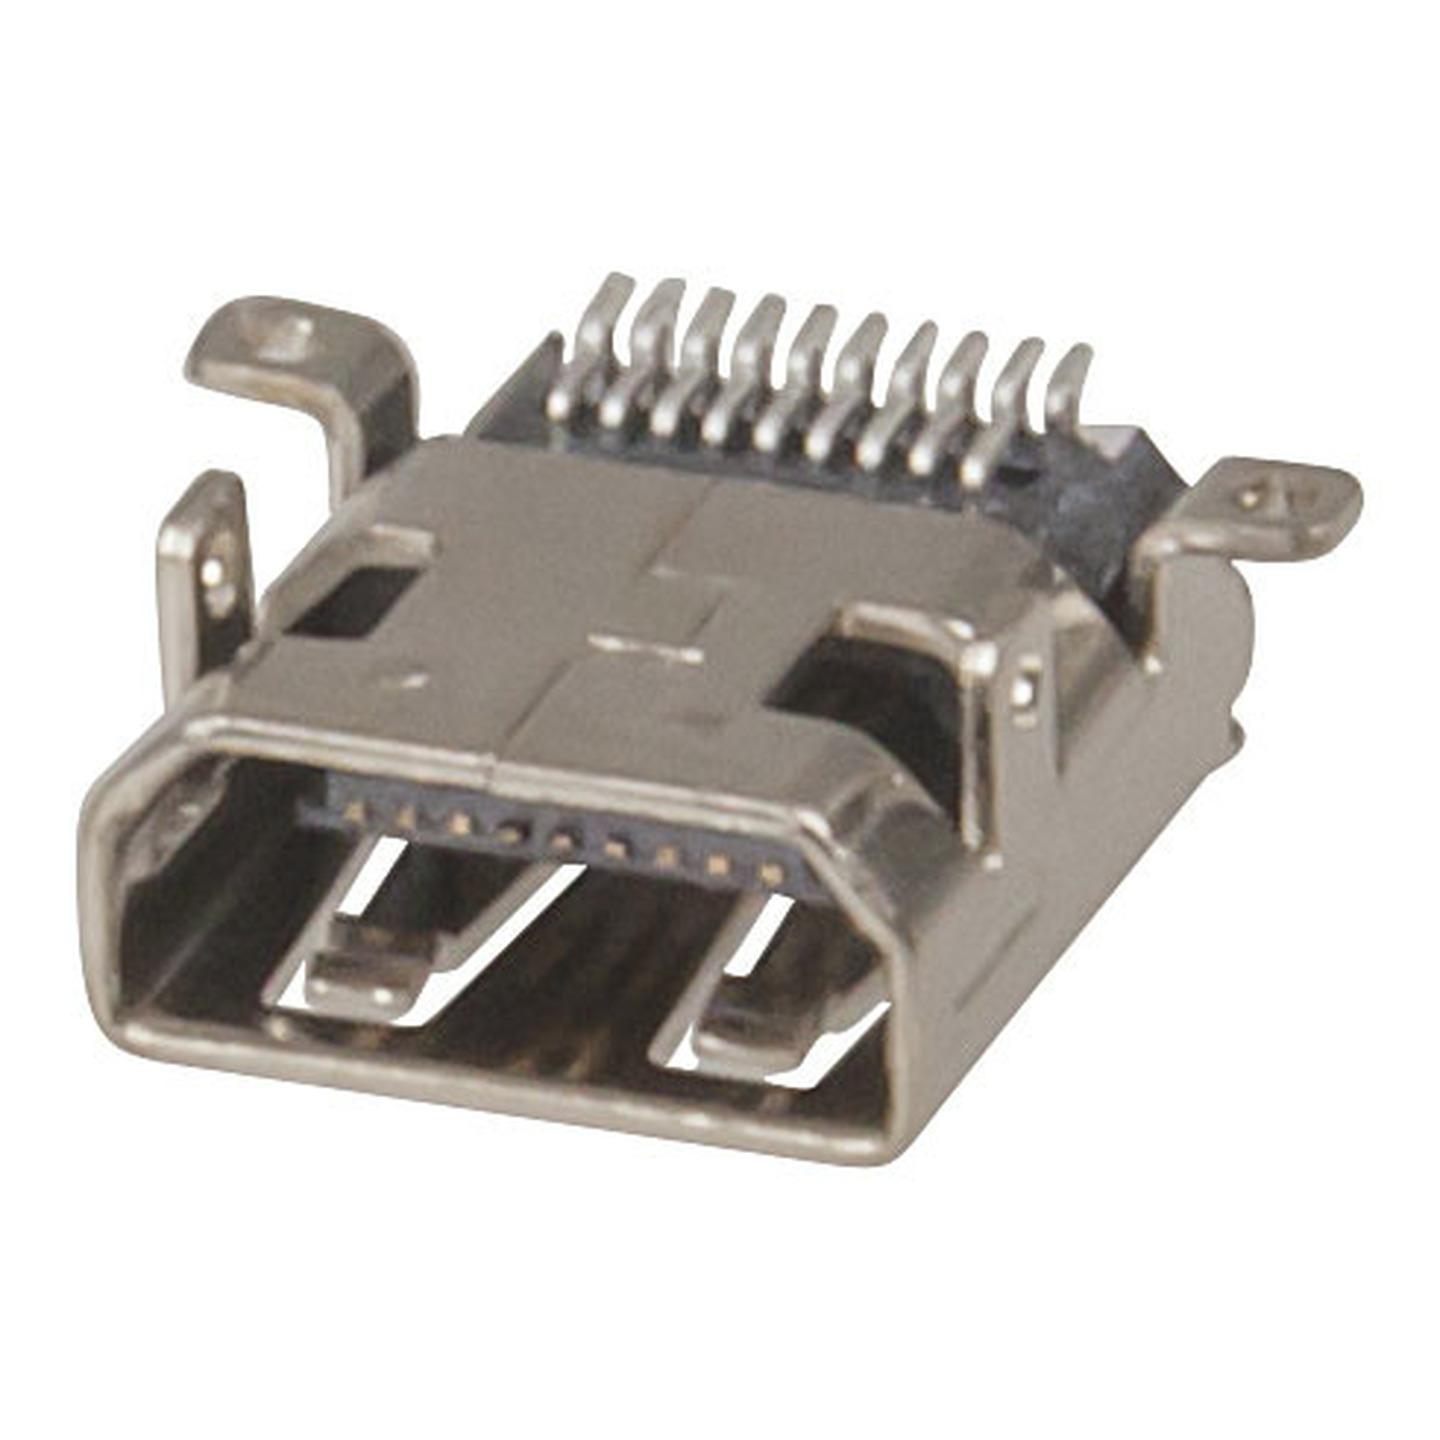 Micro HDMI Socket - PCB Mount